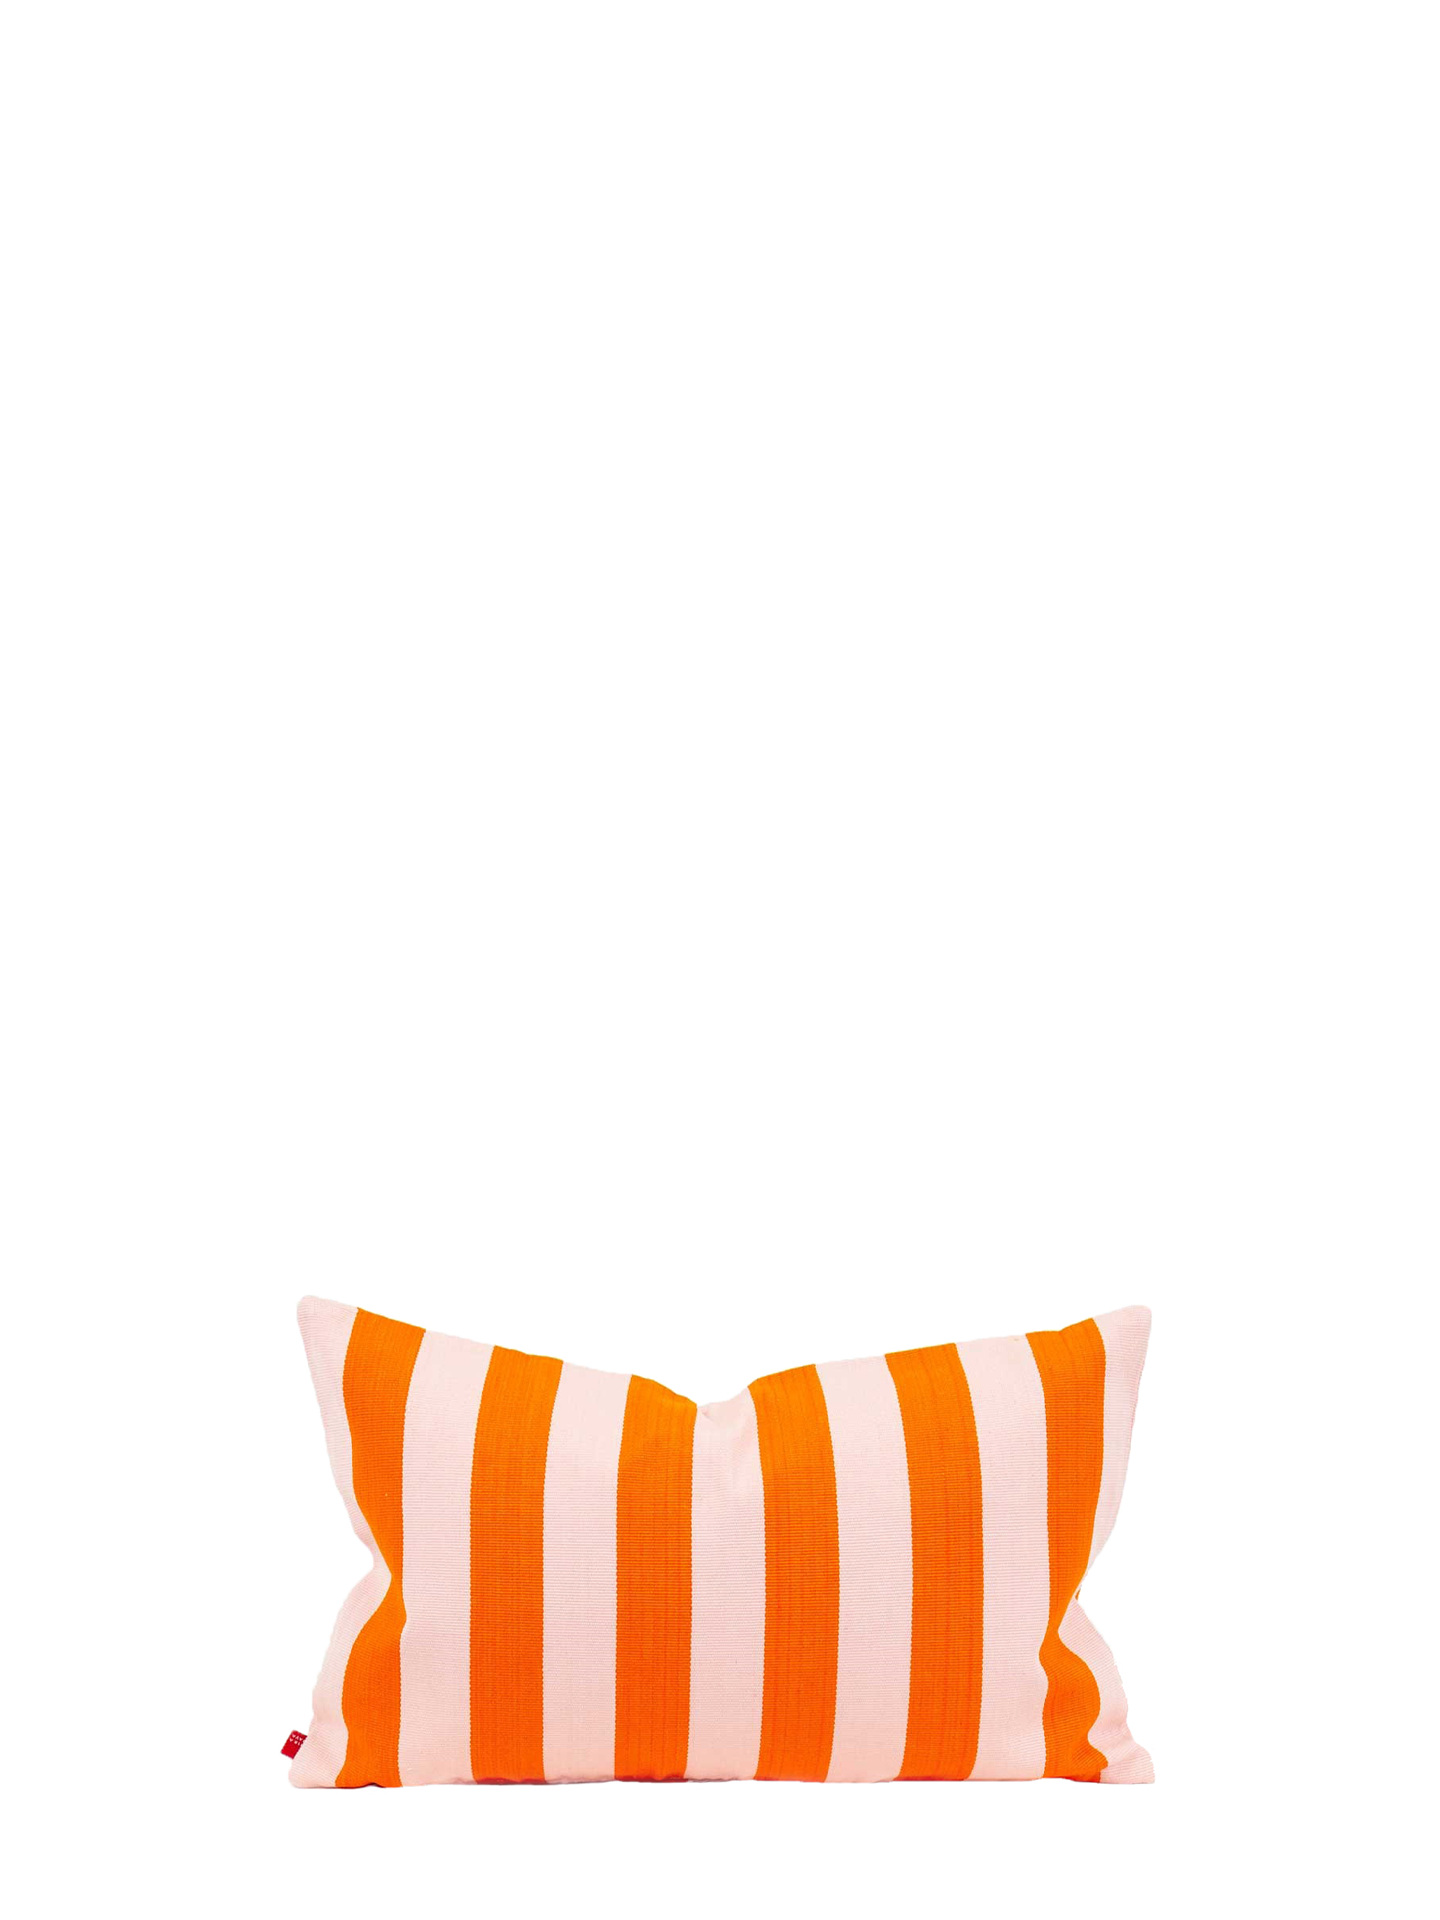 Carla Small Cushion Cover (30x50cm), orange-light pink